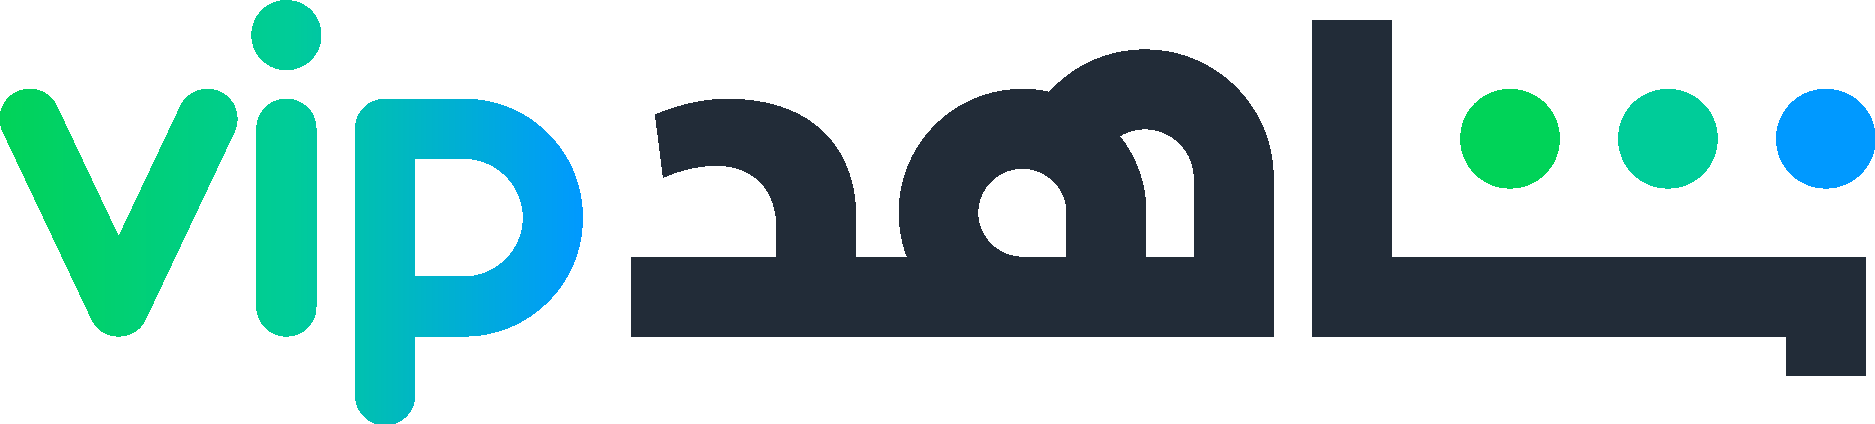 disney+ logo